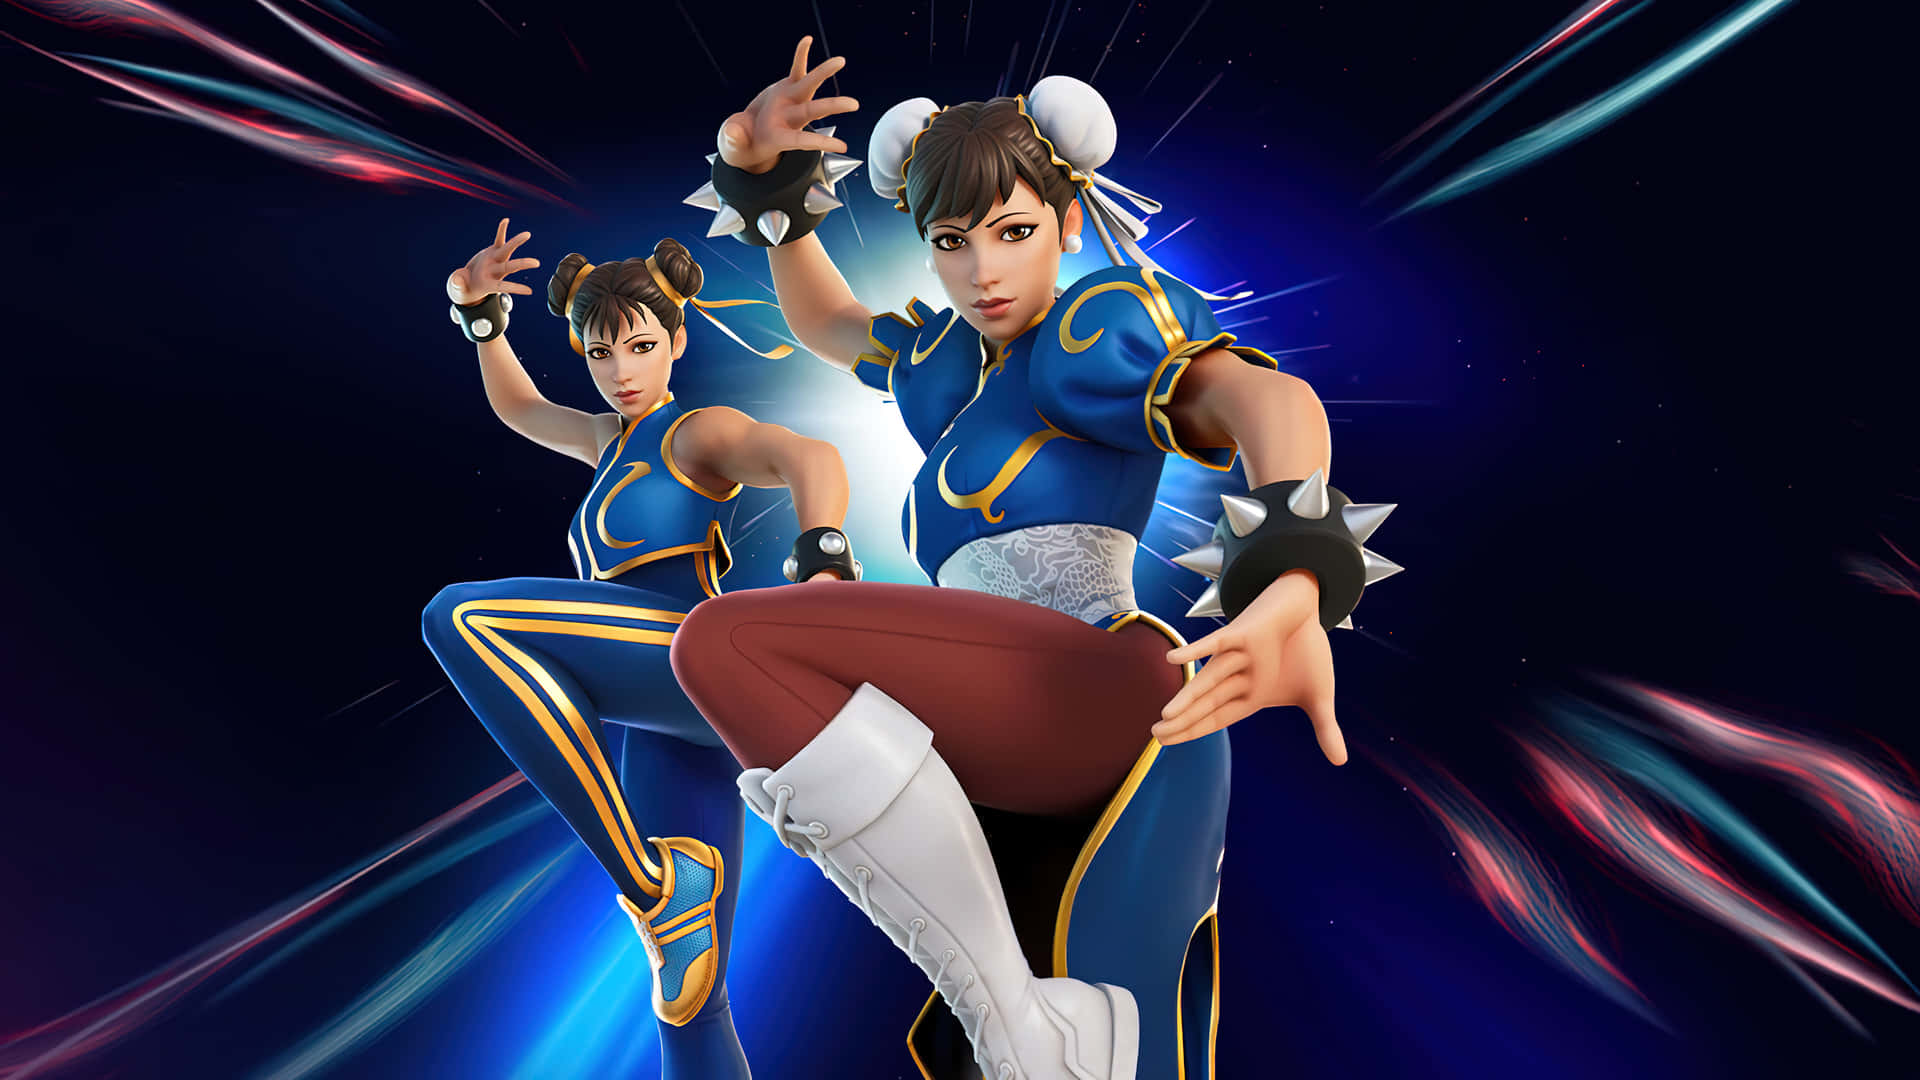 Chun Li Street Fighter Dynamic Pose Background